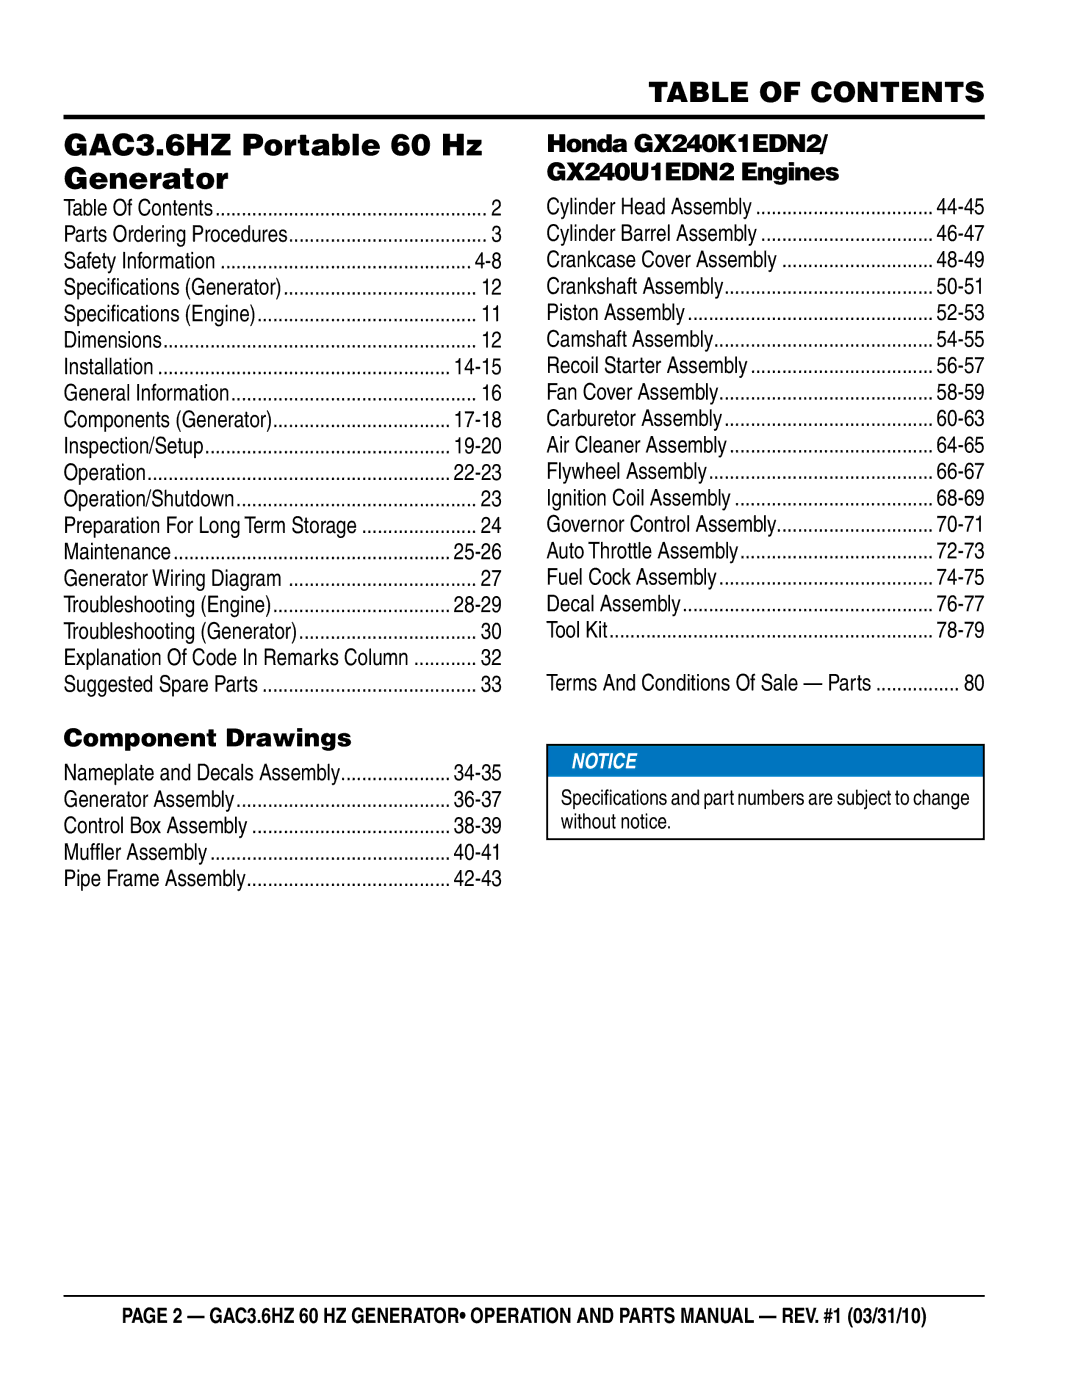 Multiquip manual GAC3.6HZ Portable 60 Hz Generator, Table of Contents 